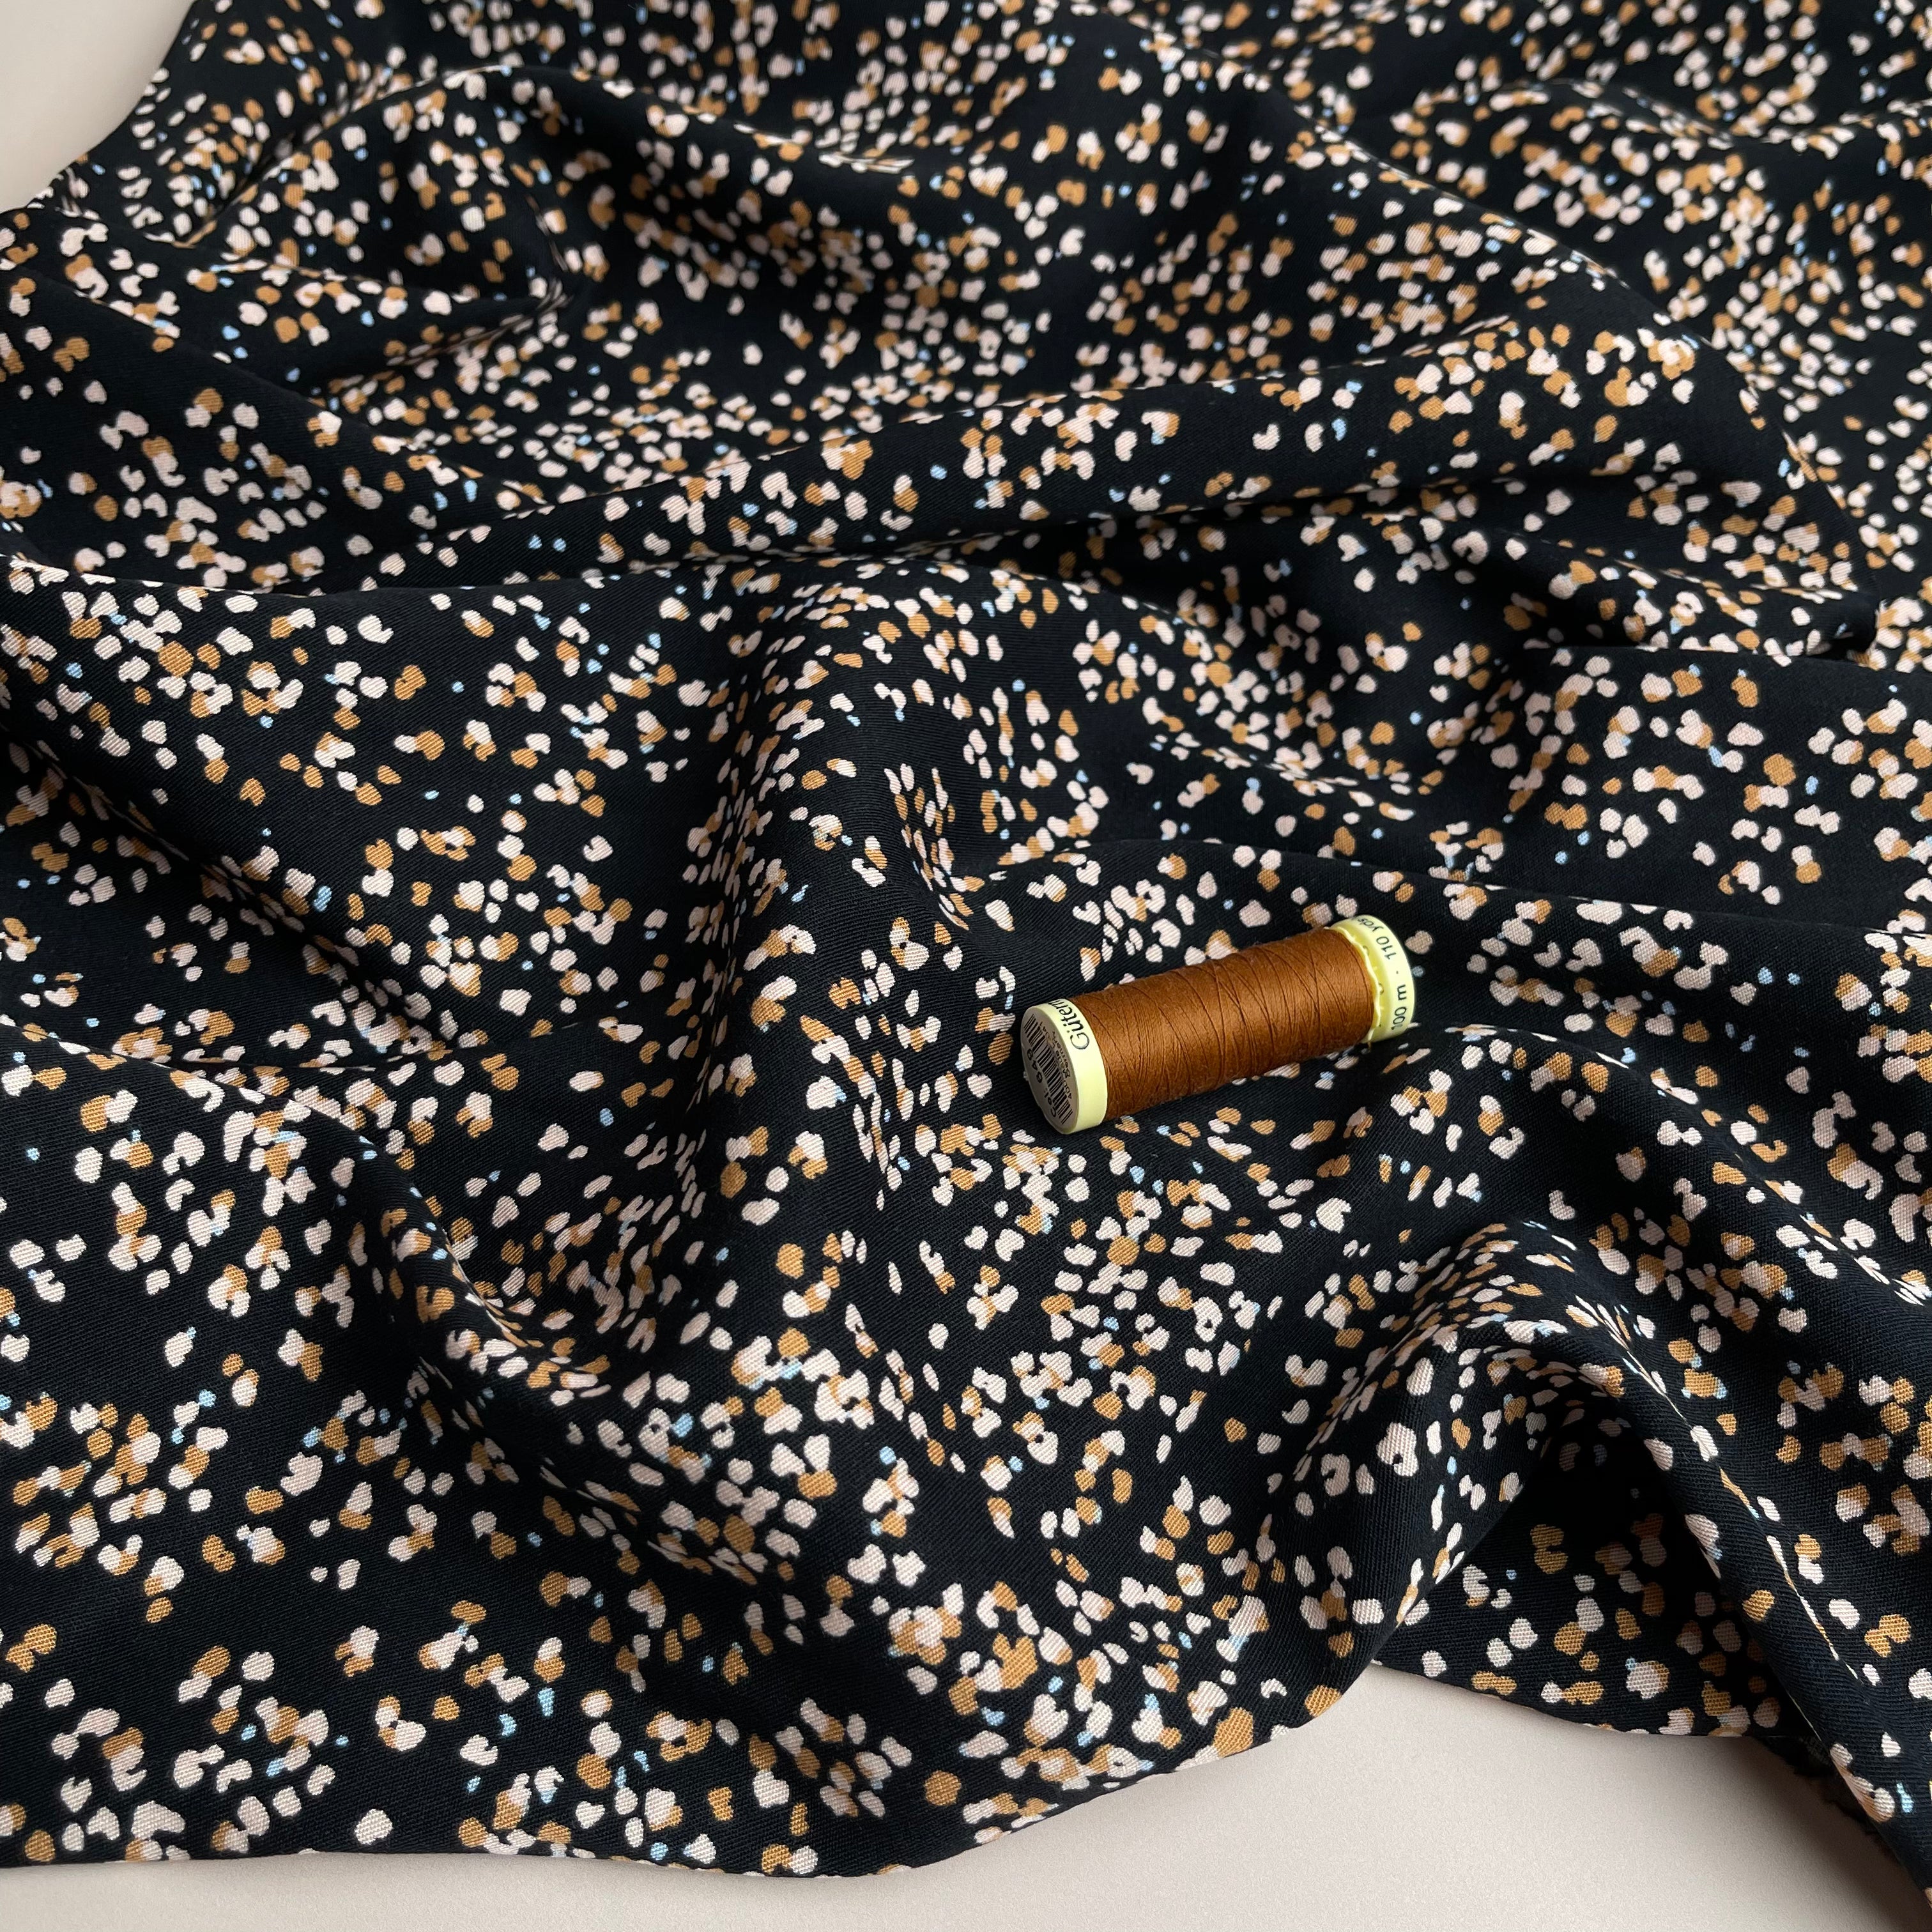 REMNANT 0.63 Metre - Rosella Speckles Black Stretch Viscose Twill Fabric